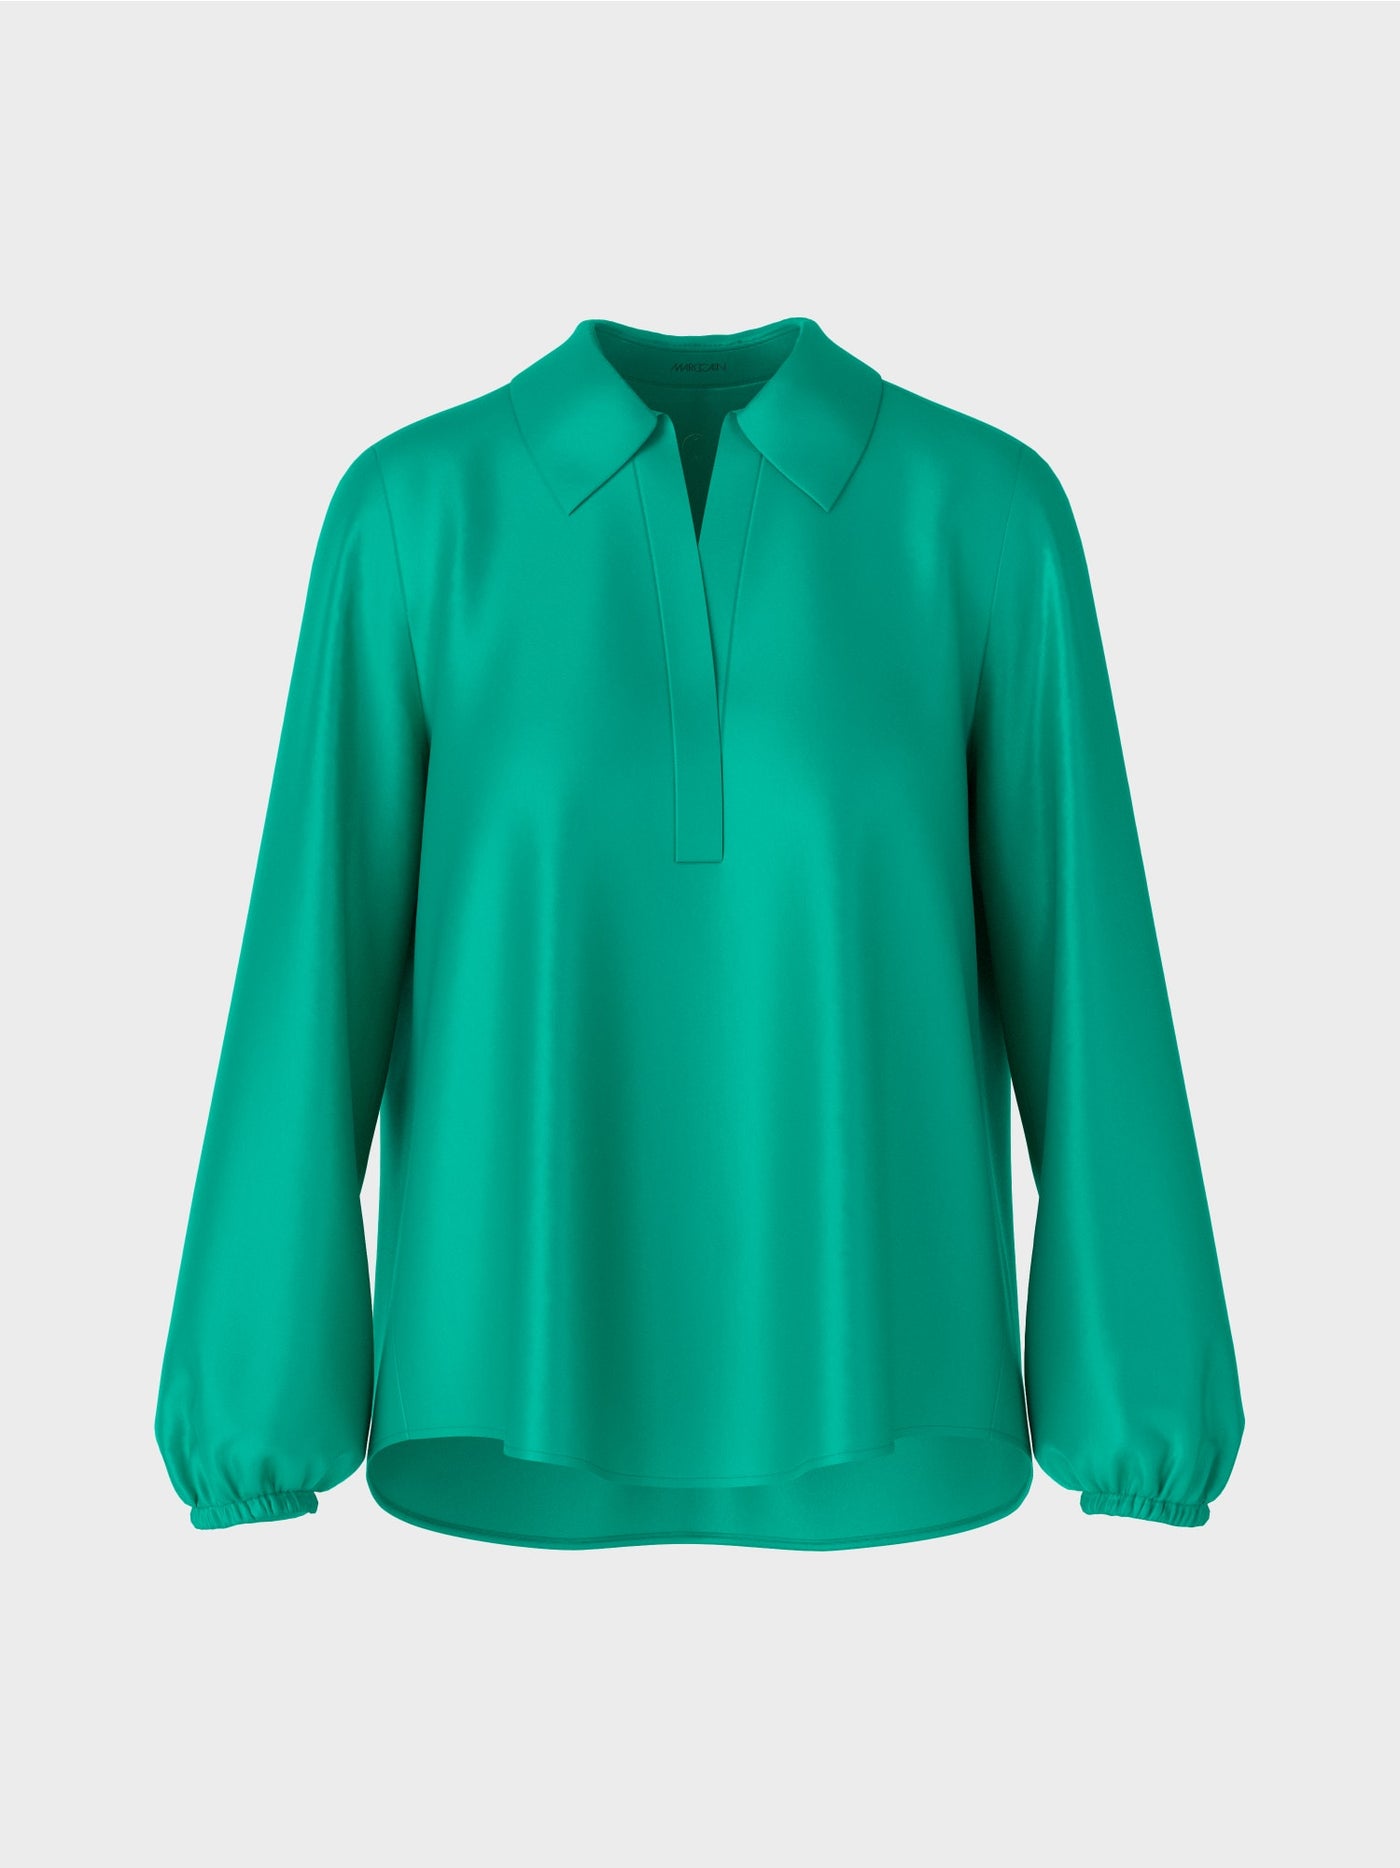 Marc Cain Bright Malachite Polo-style blouse